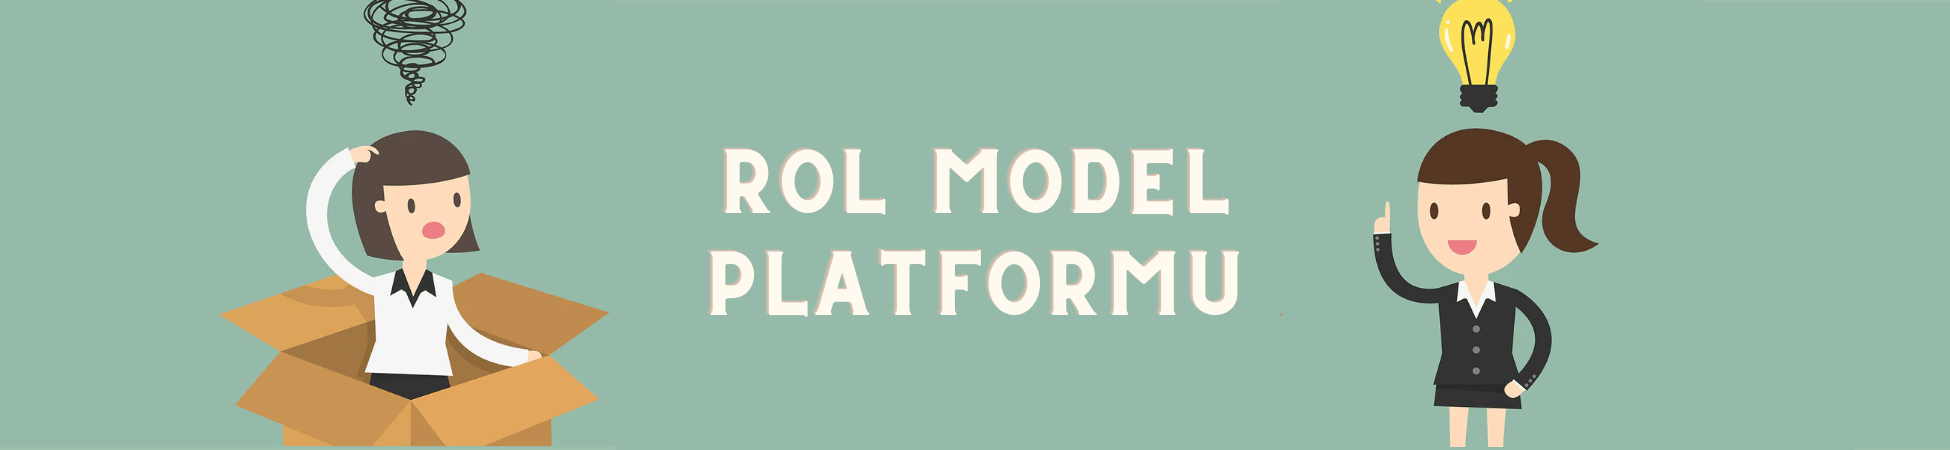 Koza rol model platformu